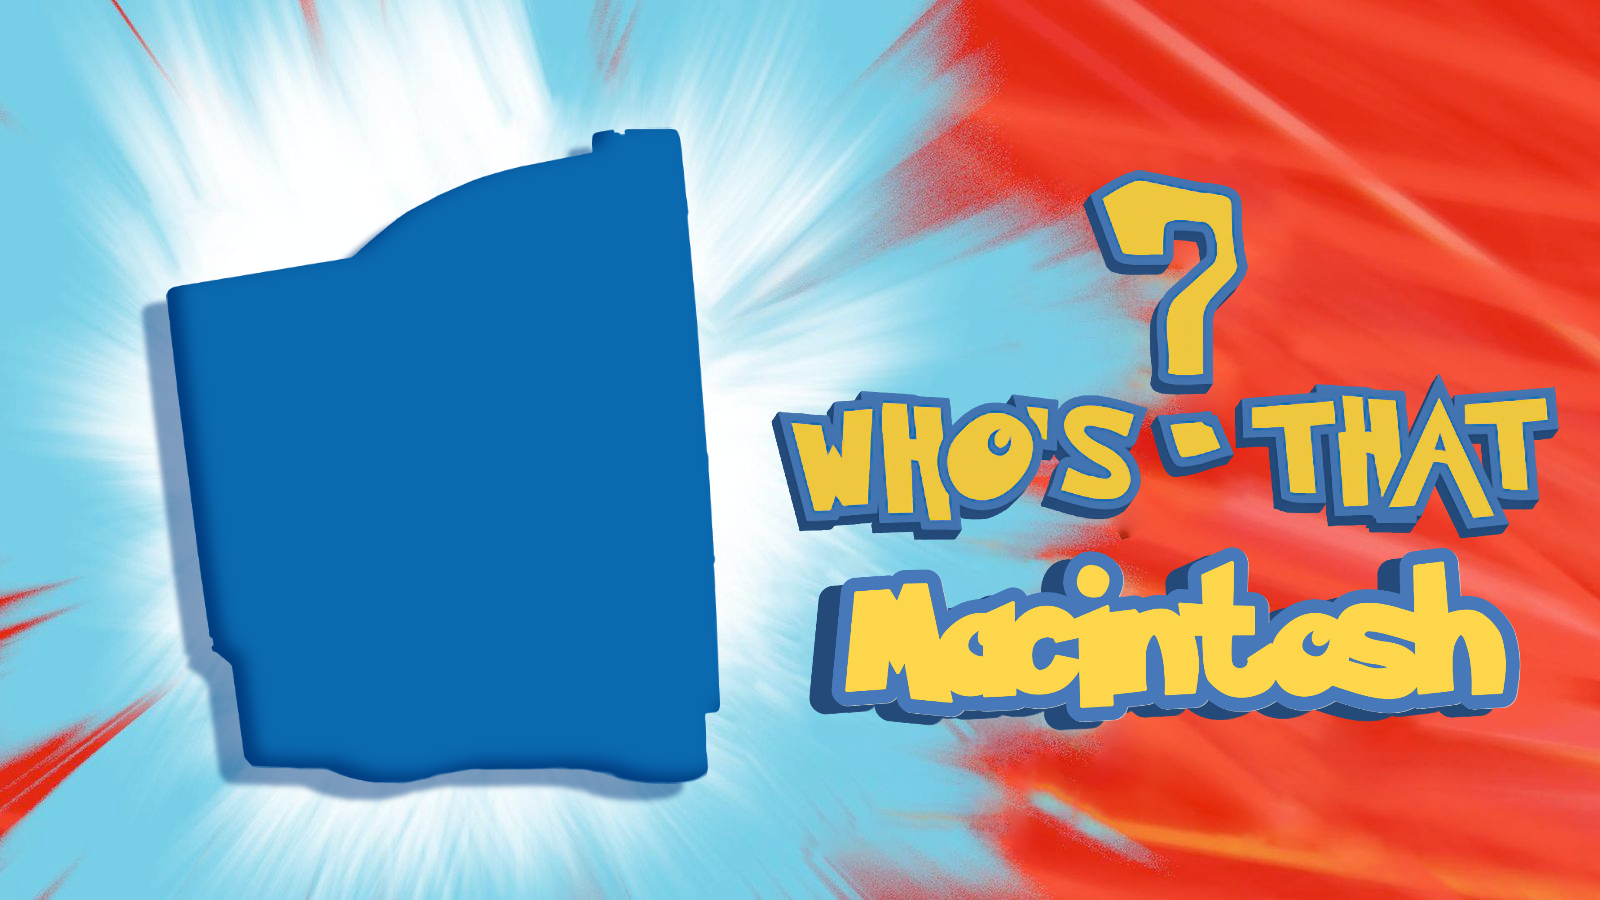 Who’s that Macintosh?